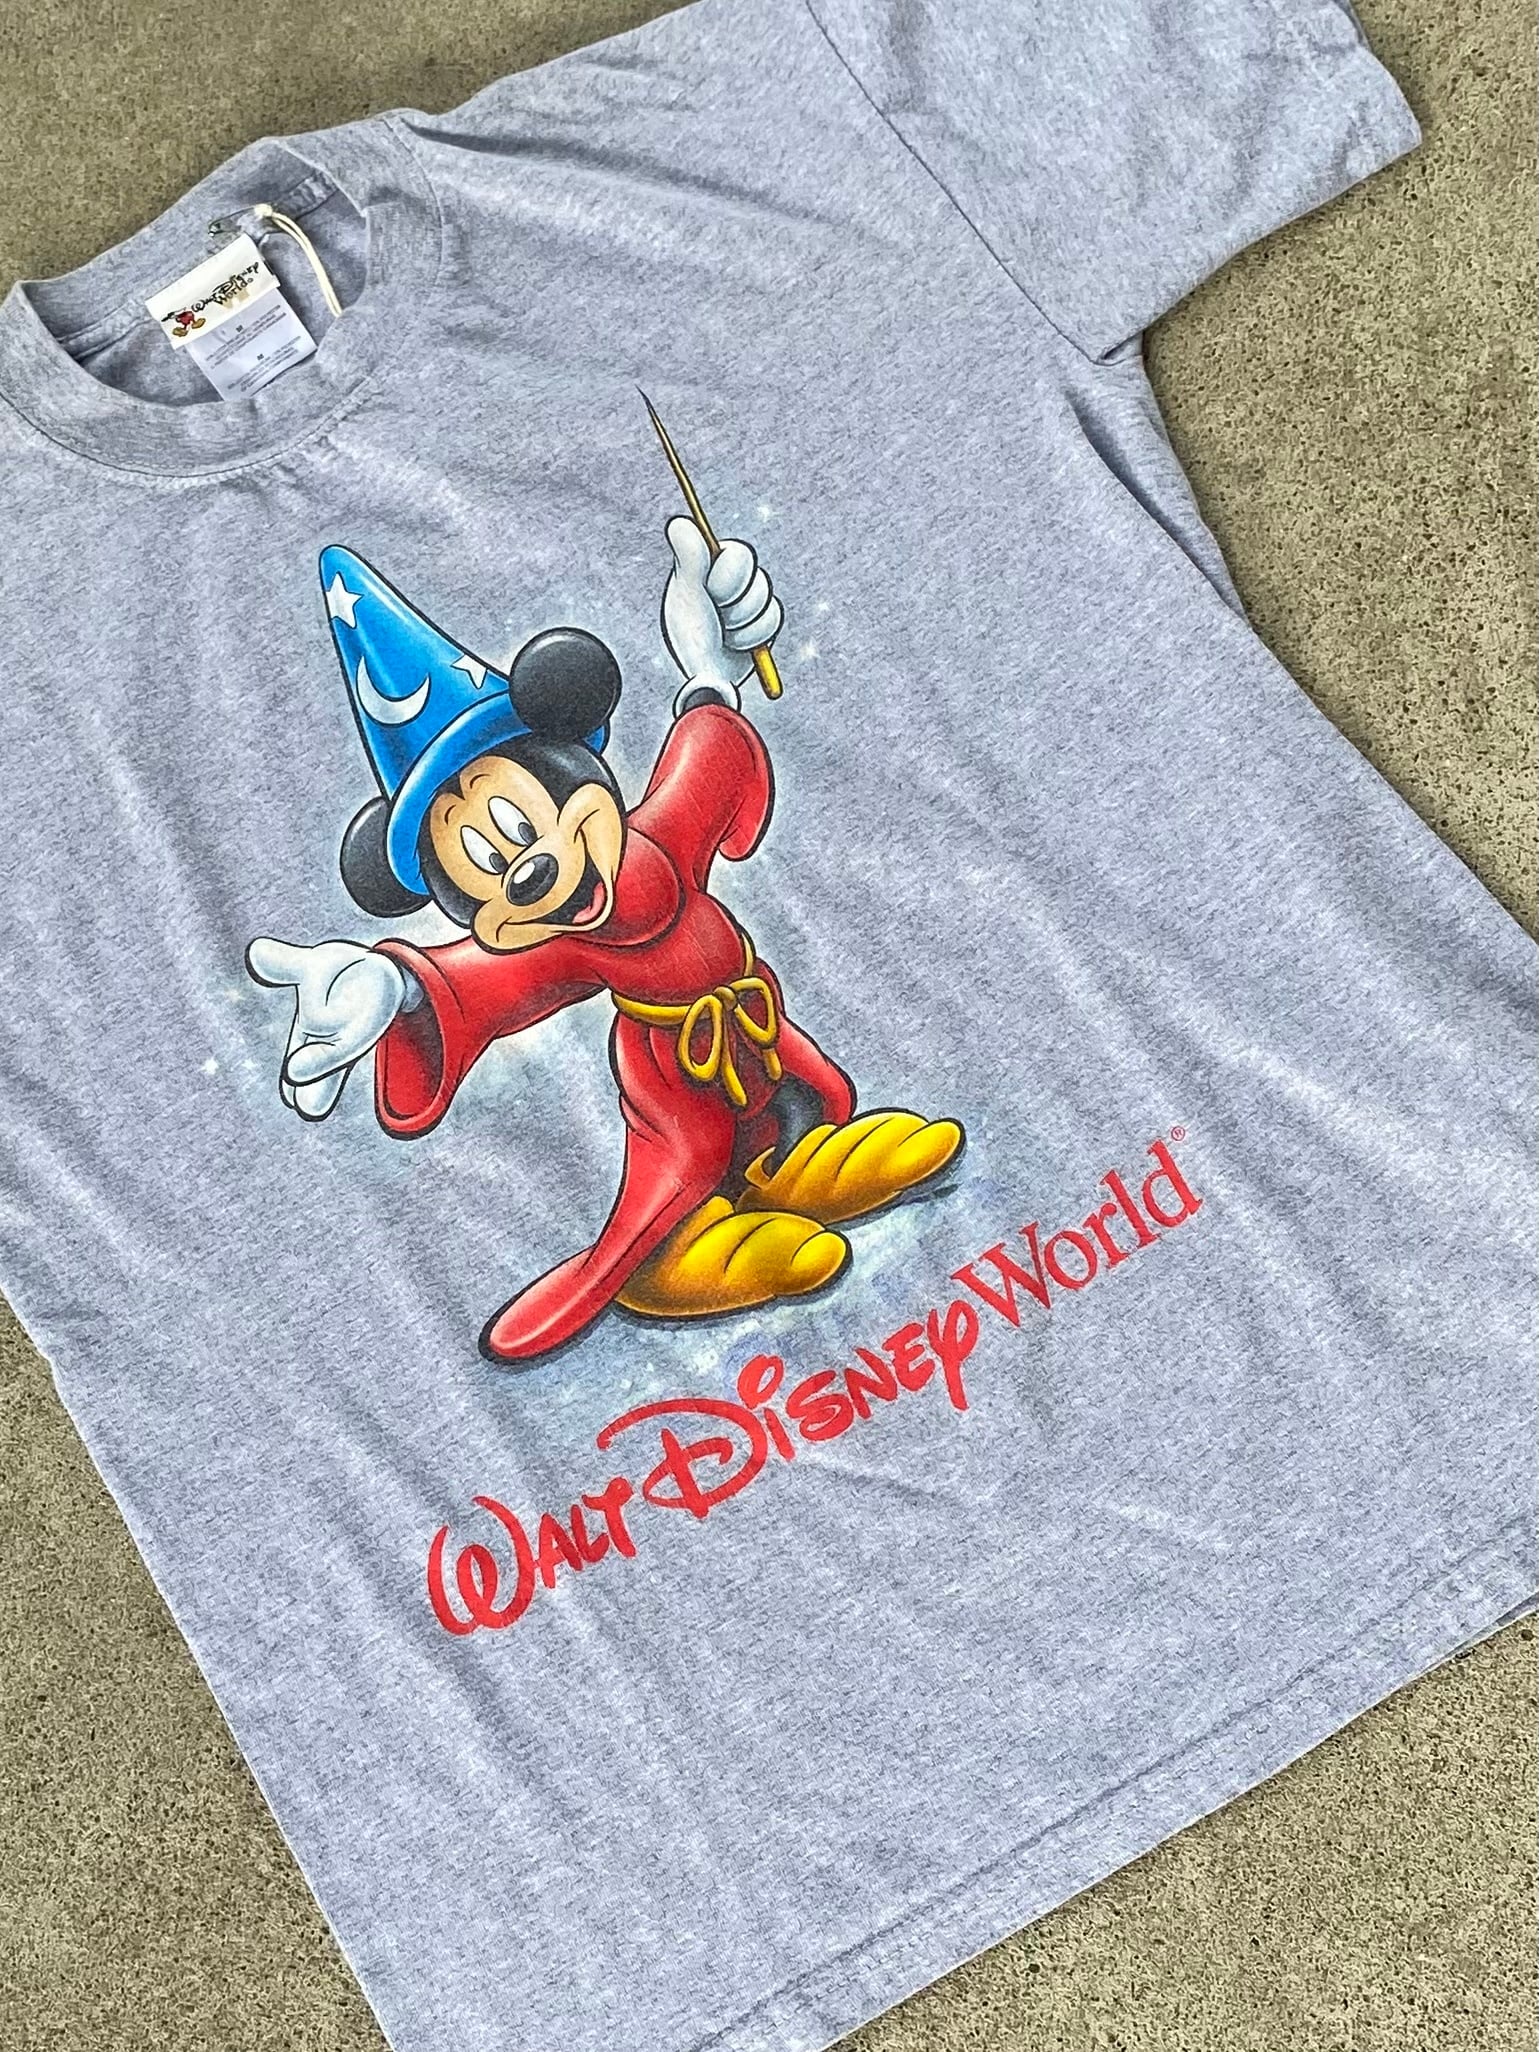 00's】Disney Mickey Fantasia Tシャツ Walt Disney World ミッキー